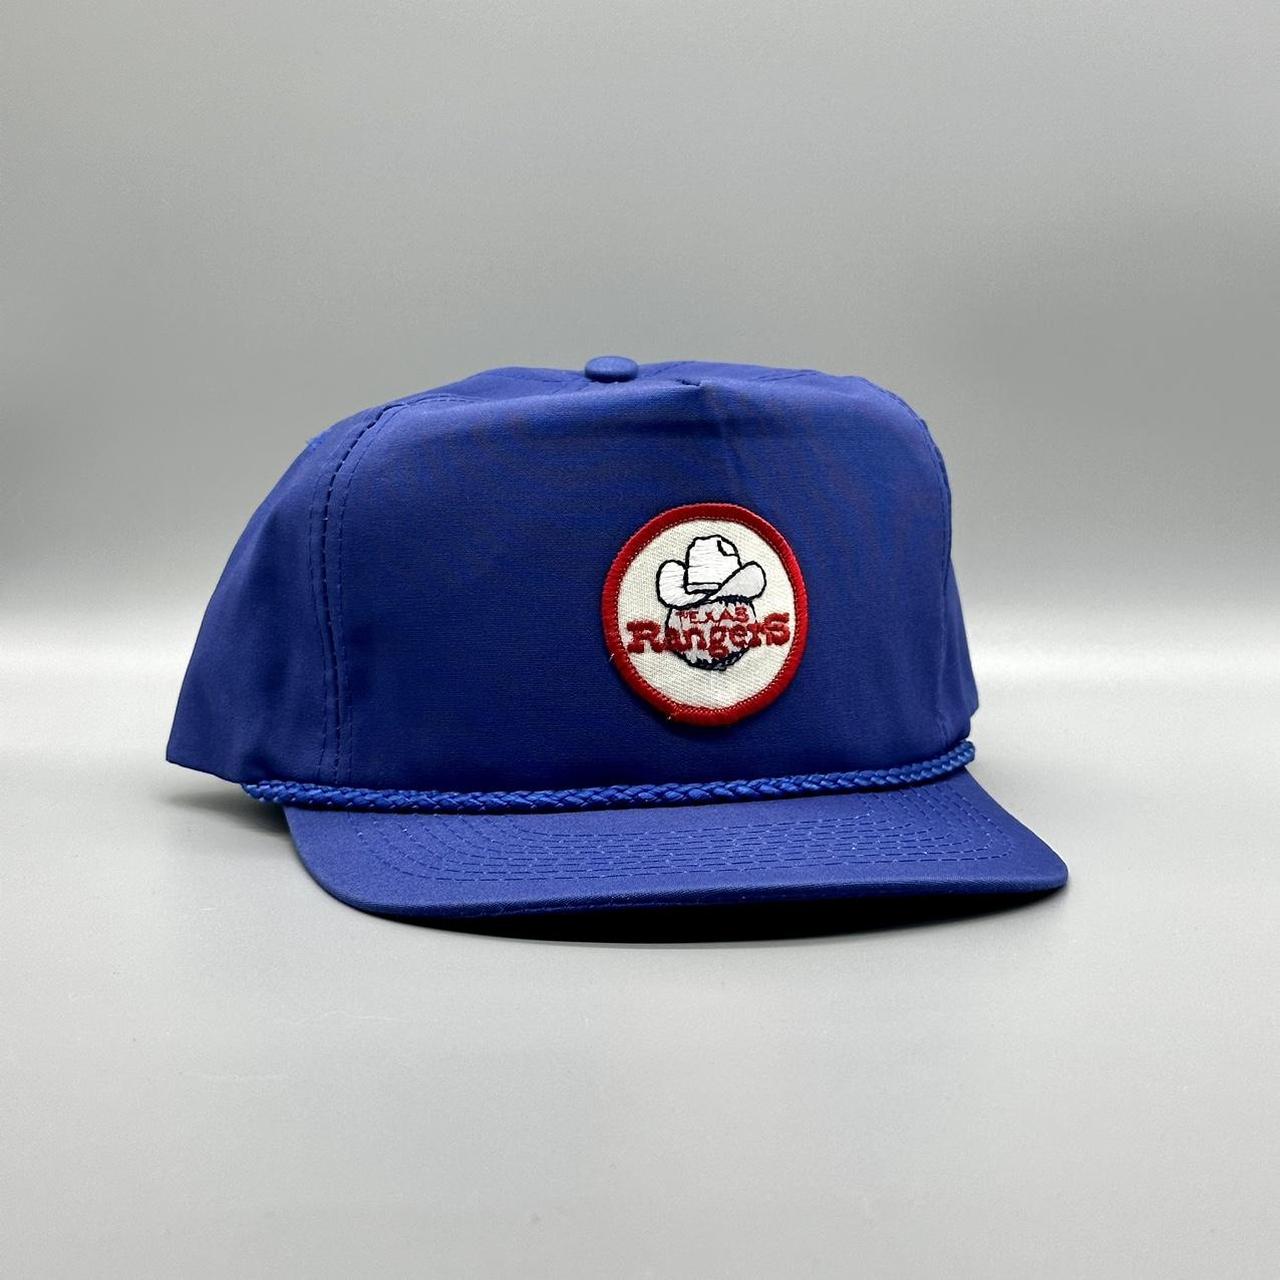 Vintage Texas Rangers Hat - 80s 90s - Blue Trucker